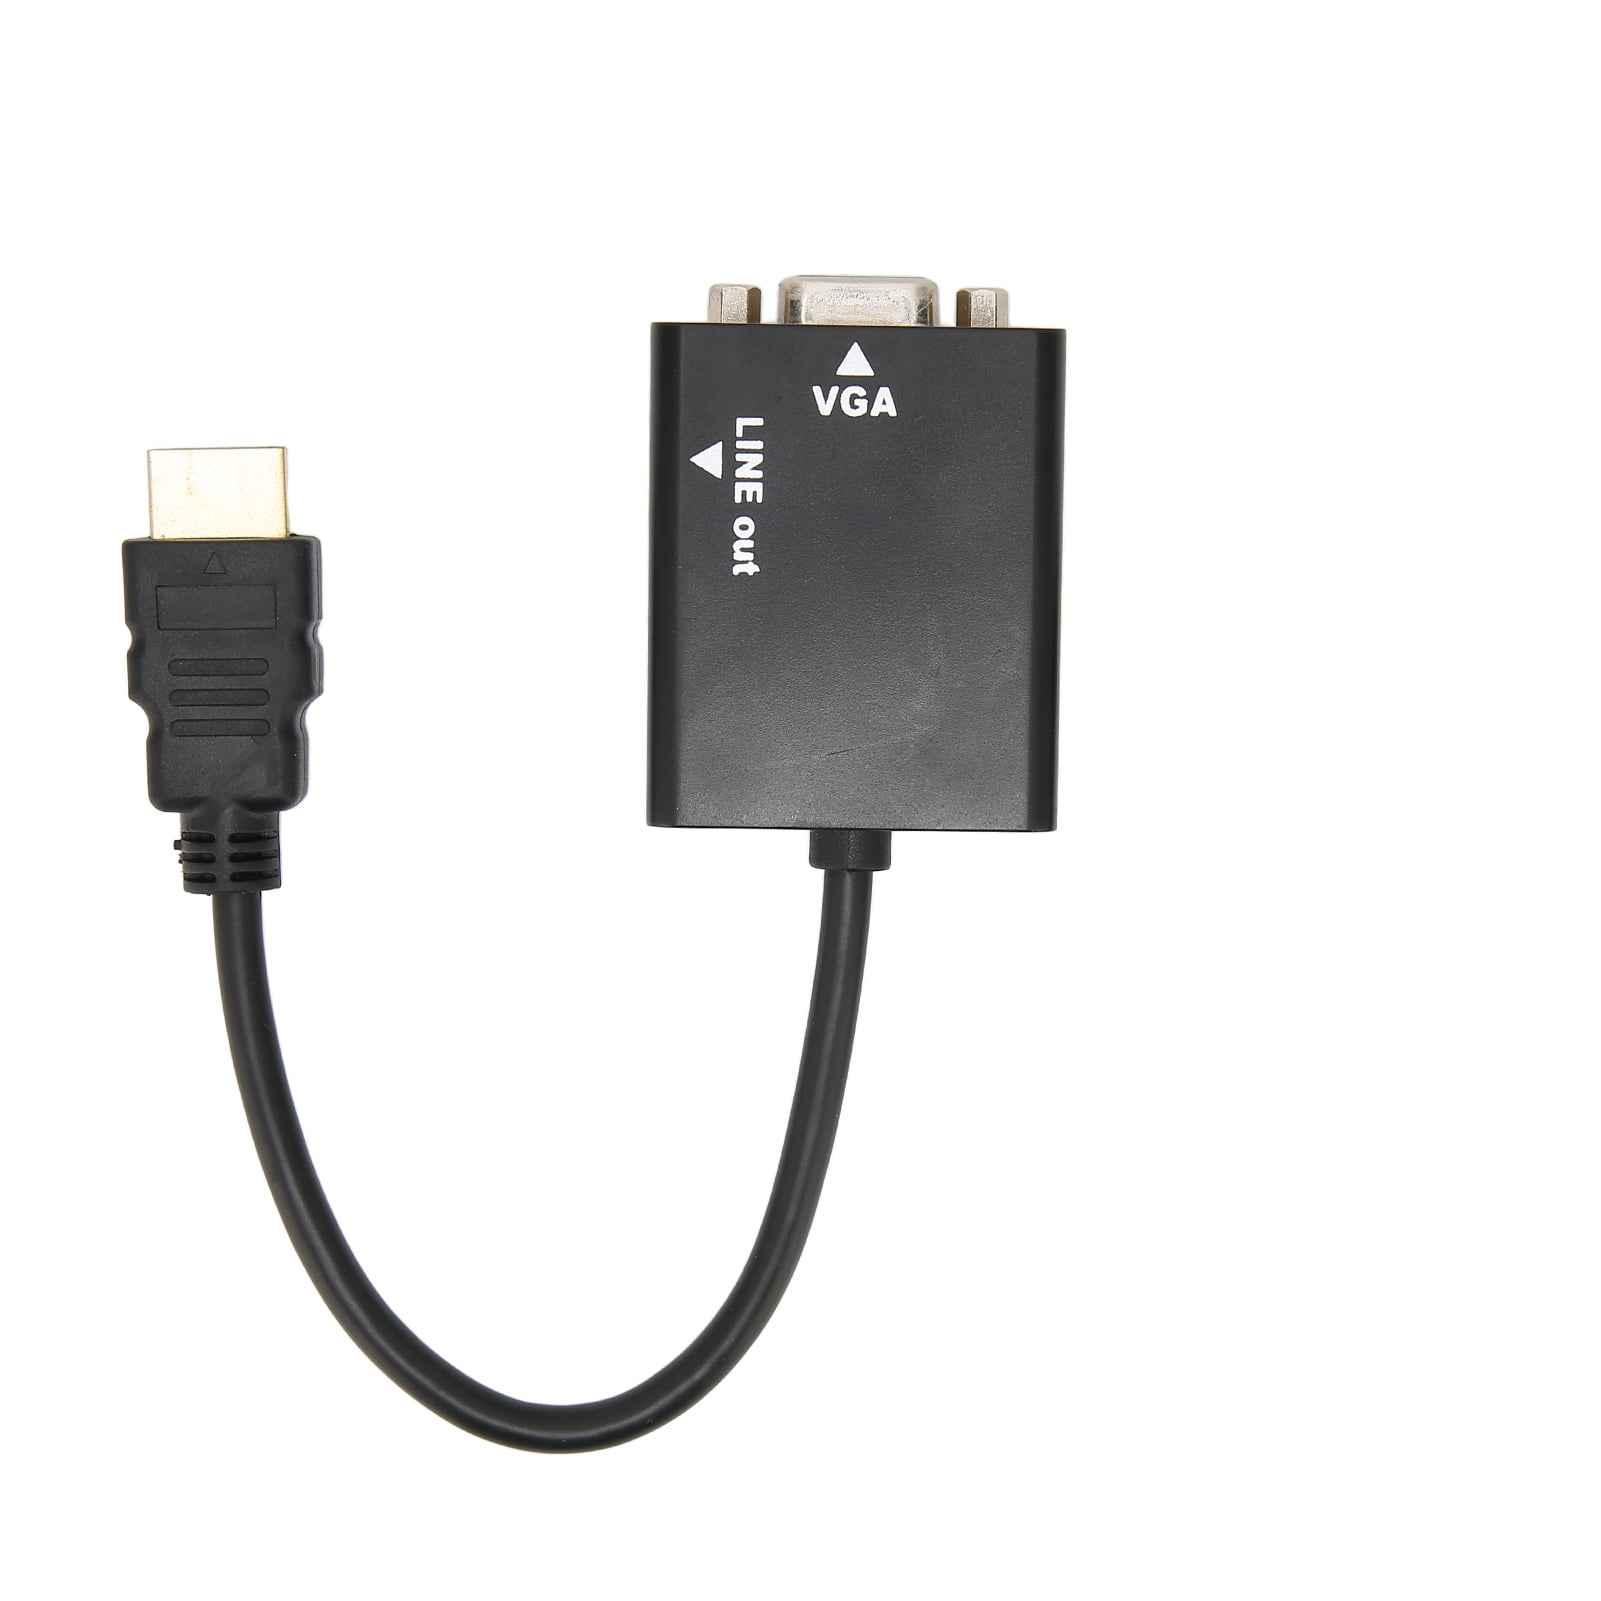 USB WiFi Network Adapter,iMeshbean Dual Band 2.4/5Ghz 1200Mbps Wireless WiFi Network USB Adapter w/Antenna 802.11AC 